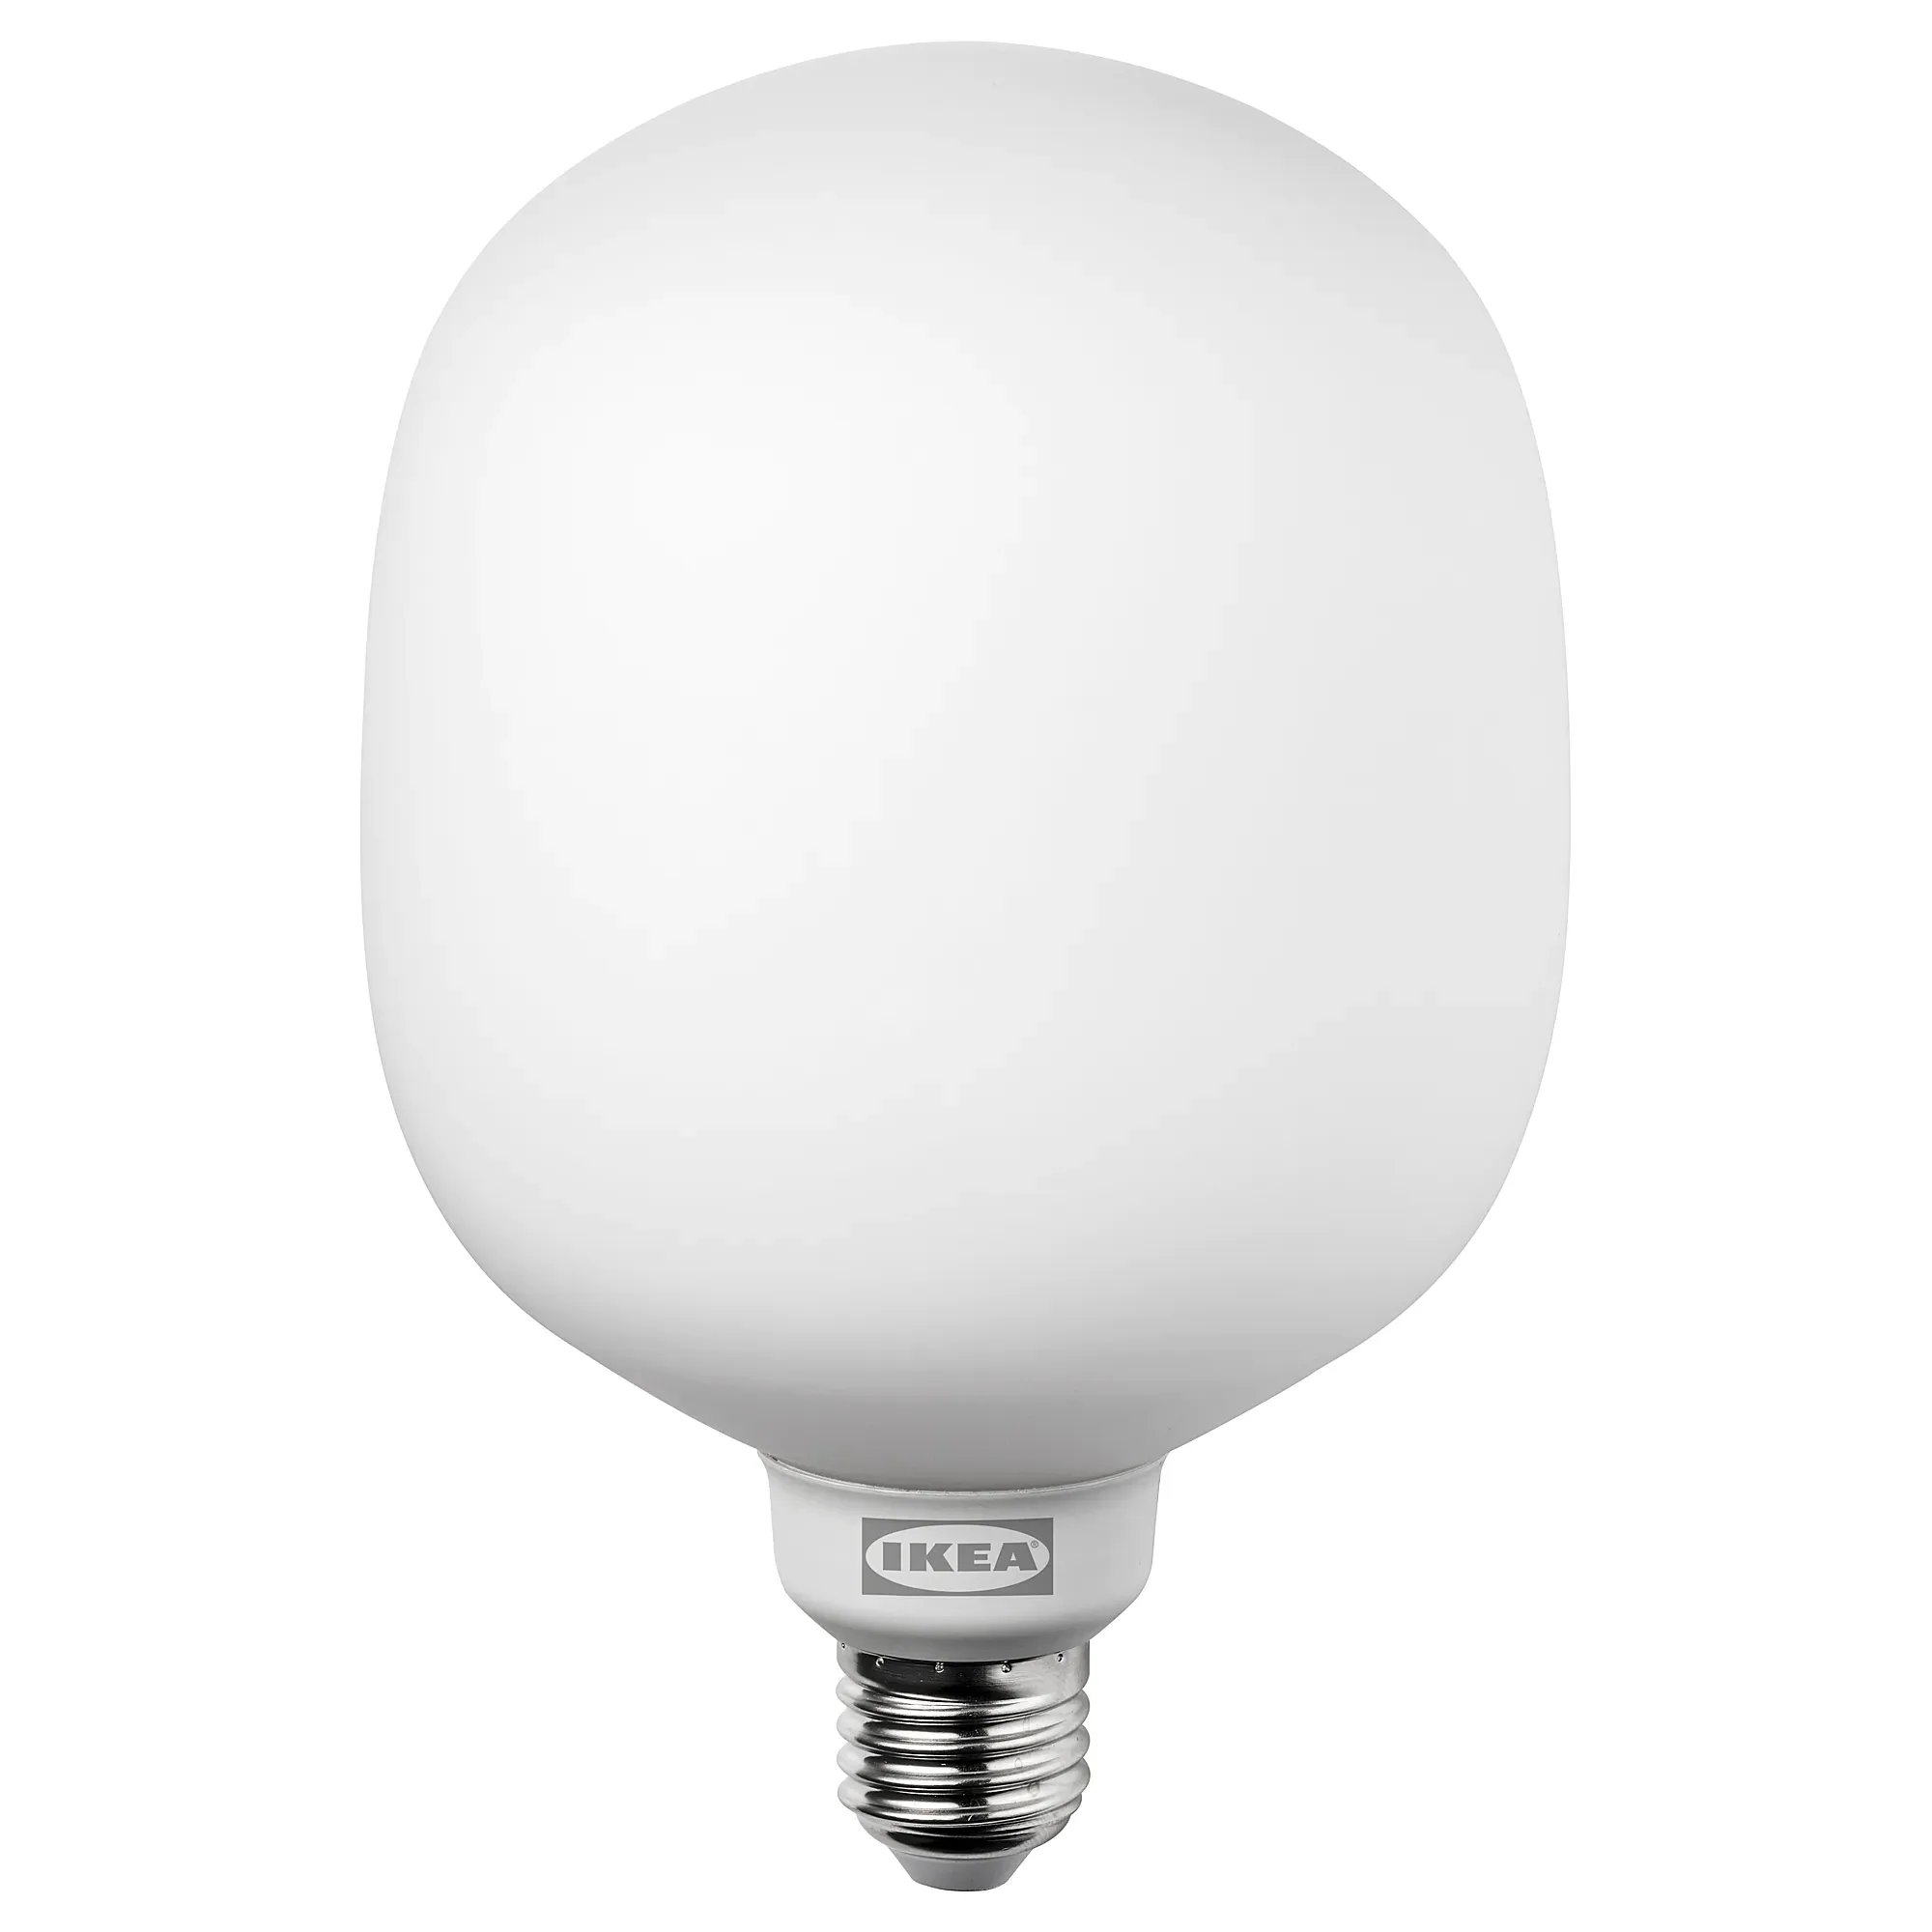 Tradfri LED bulb E26 450 lumen, dimmable, opal white